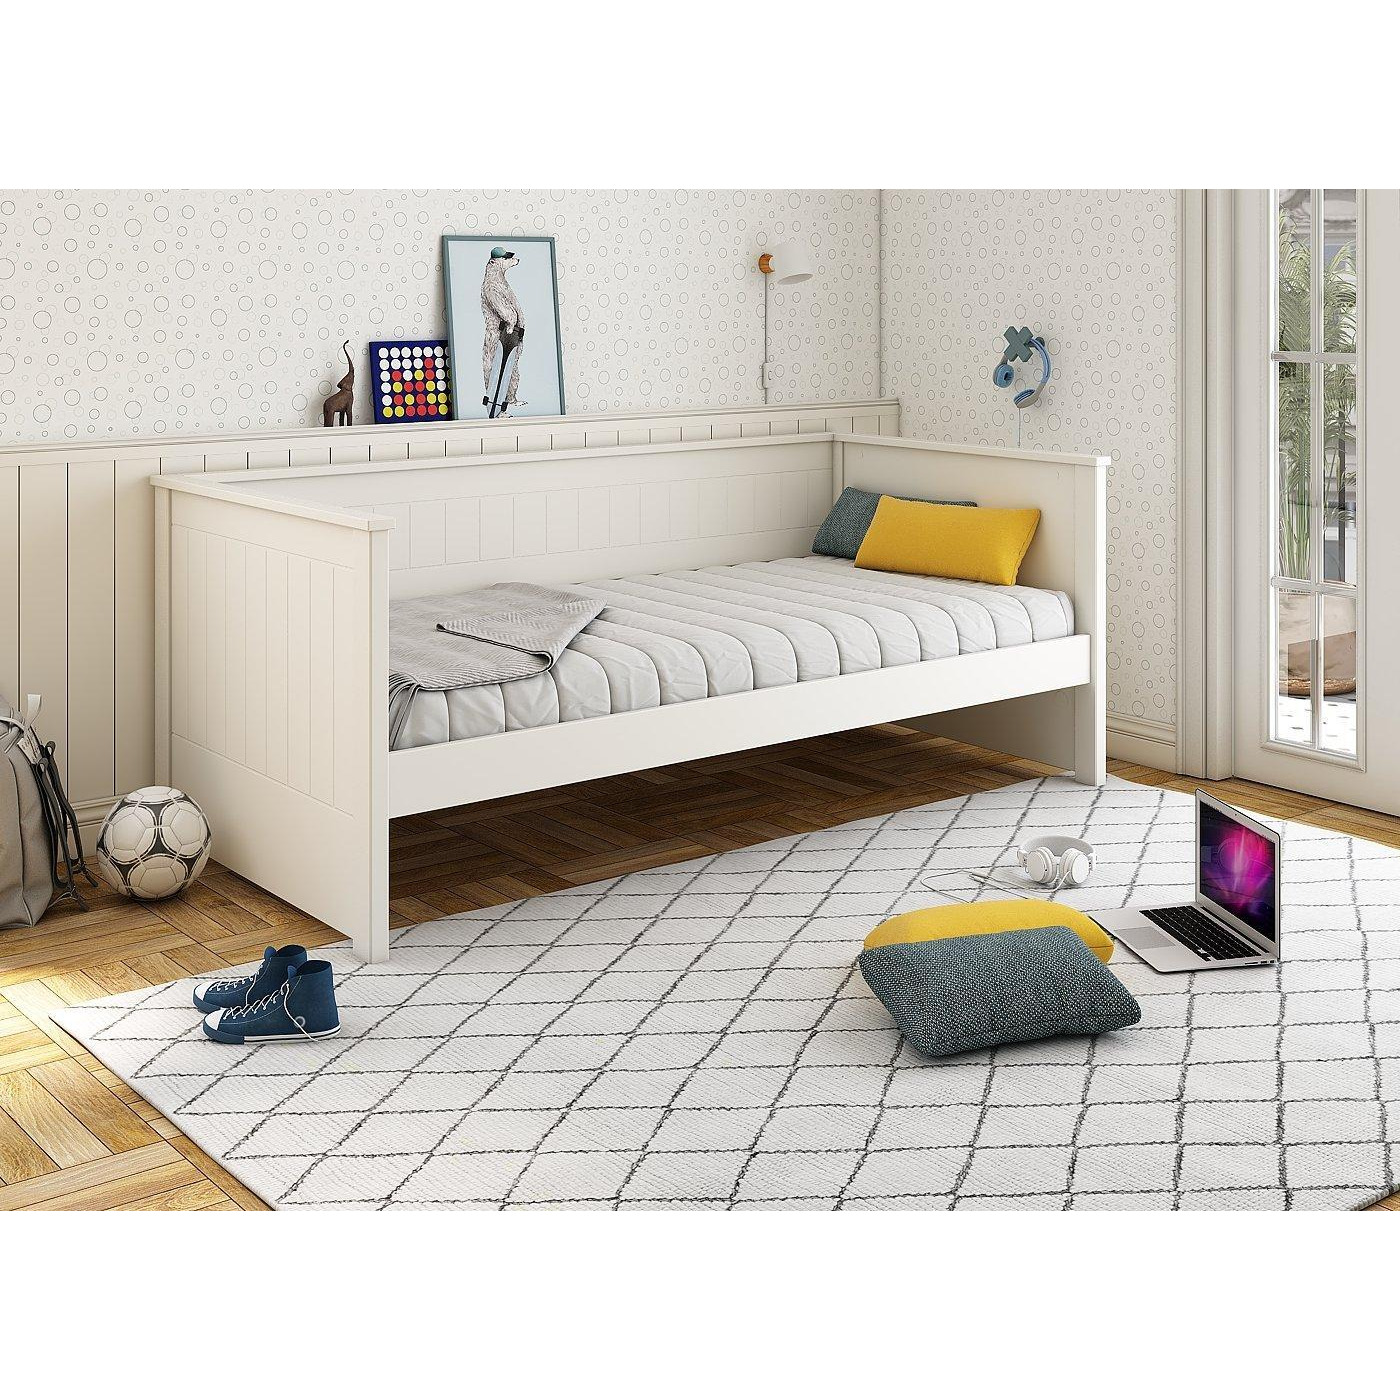 Northwood Day bed - 3'0 Single - White